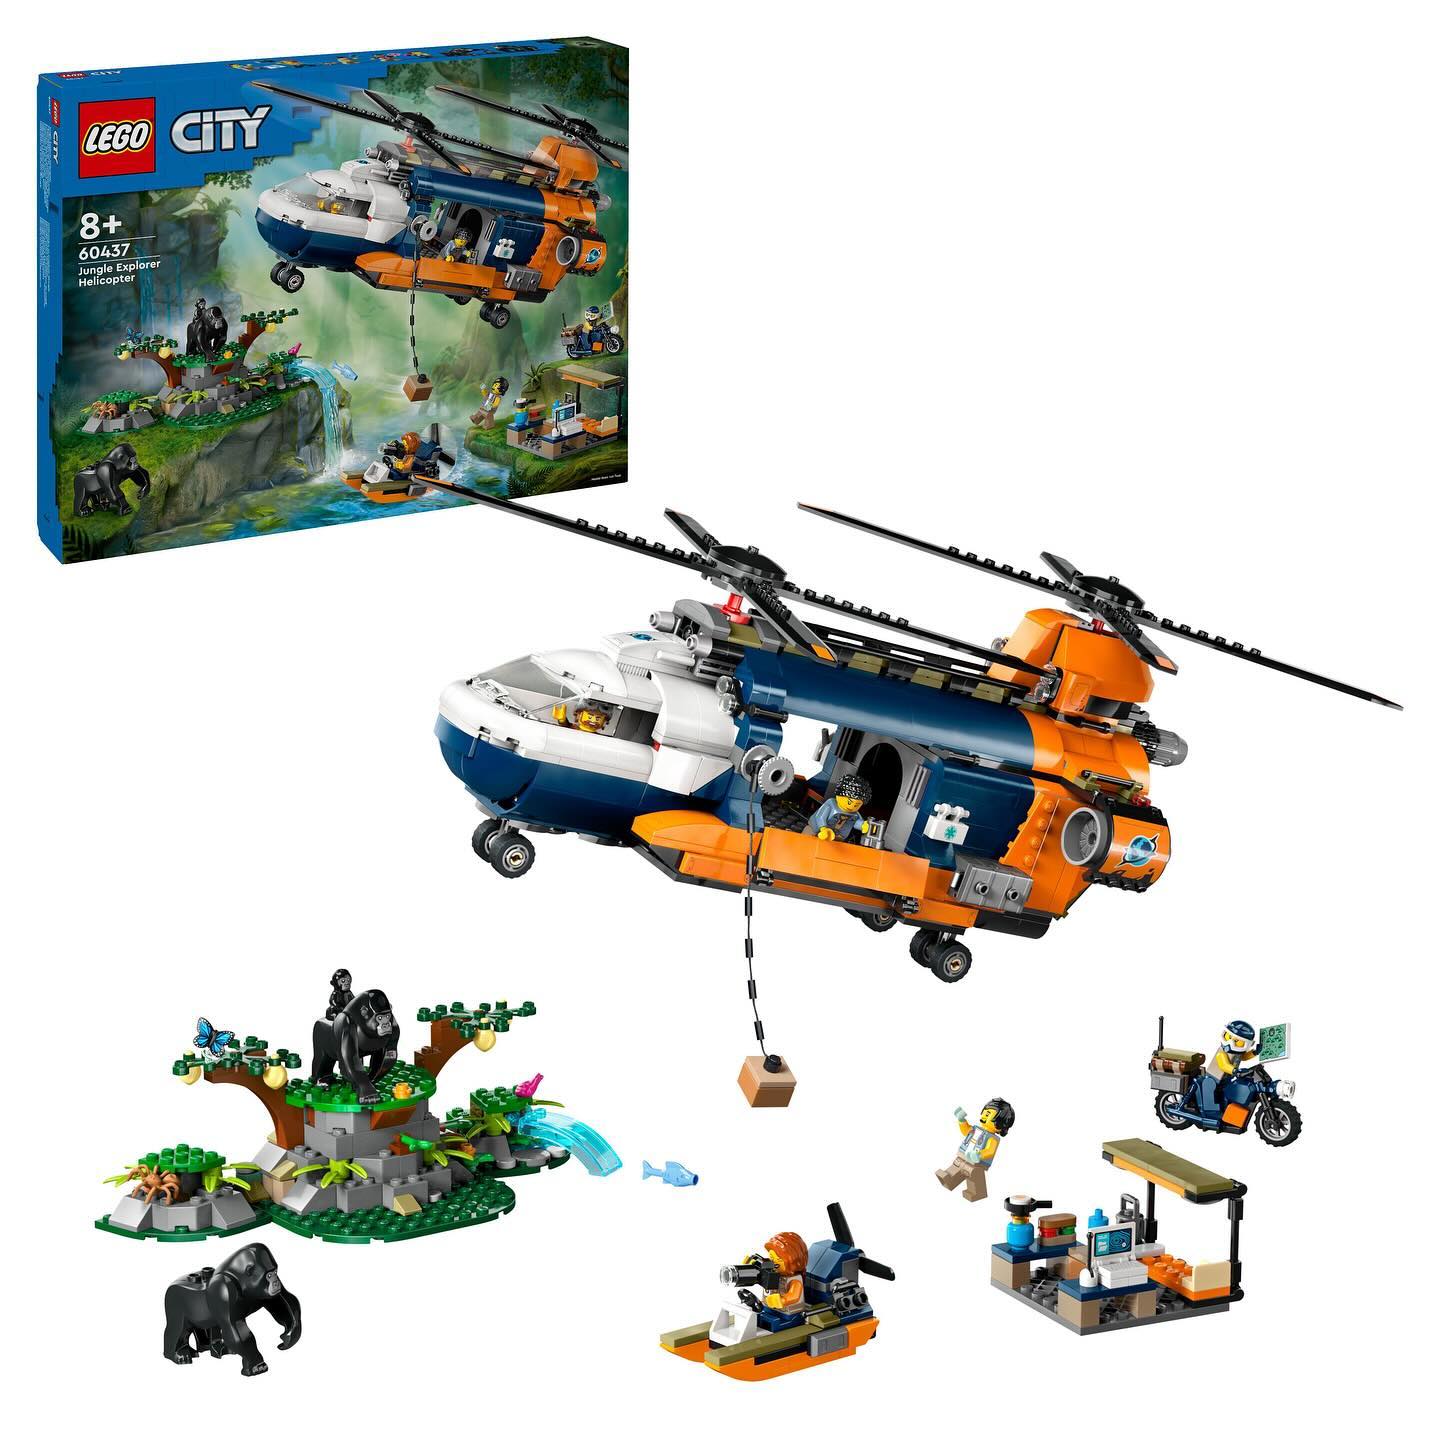 LEGO-City-Jungle-Explorer-Helicopter-60437.jpg